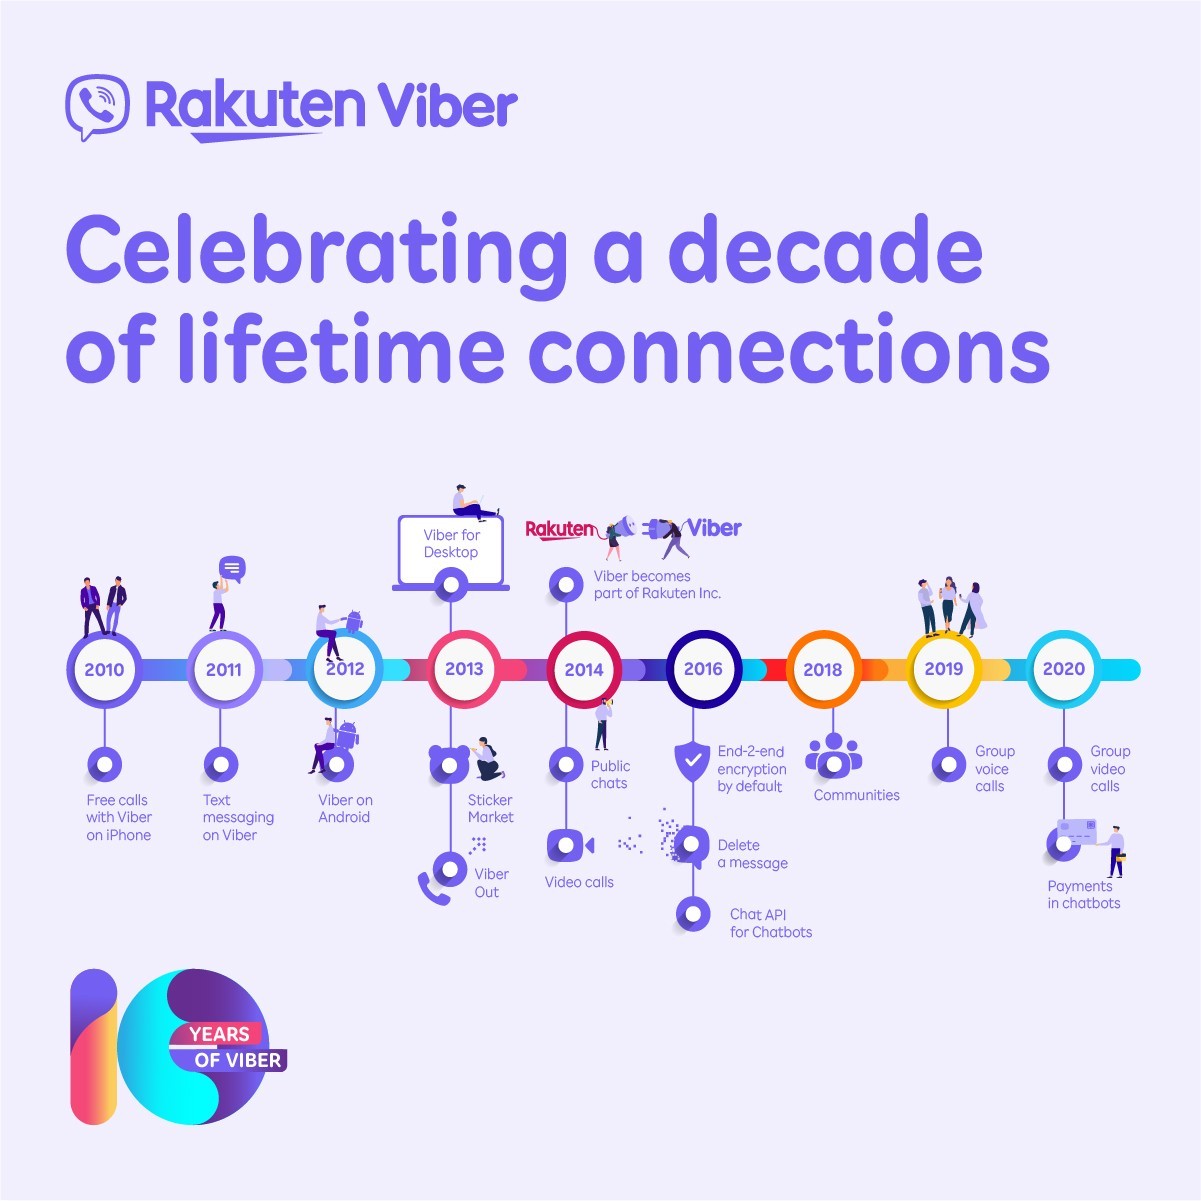 Rakuten Viber celebrates a decade of lifetime connections